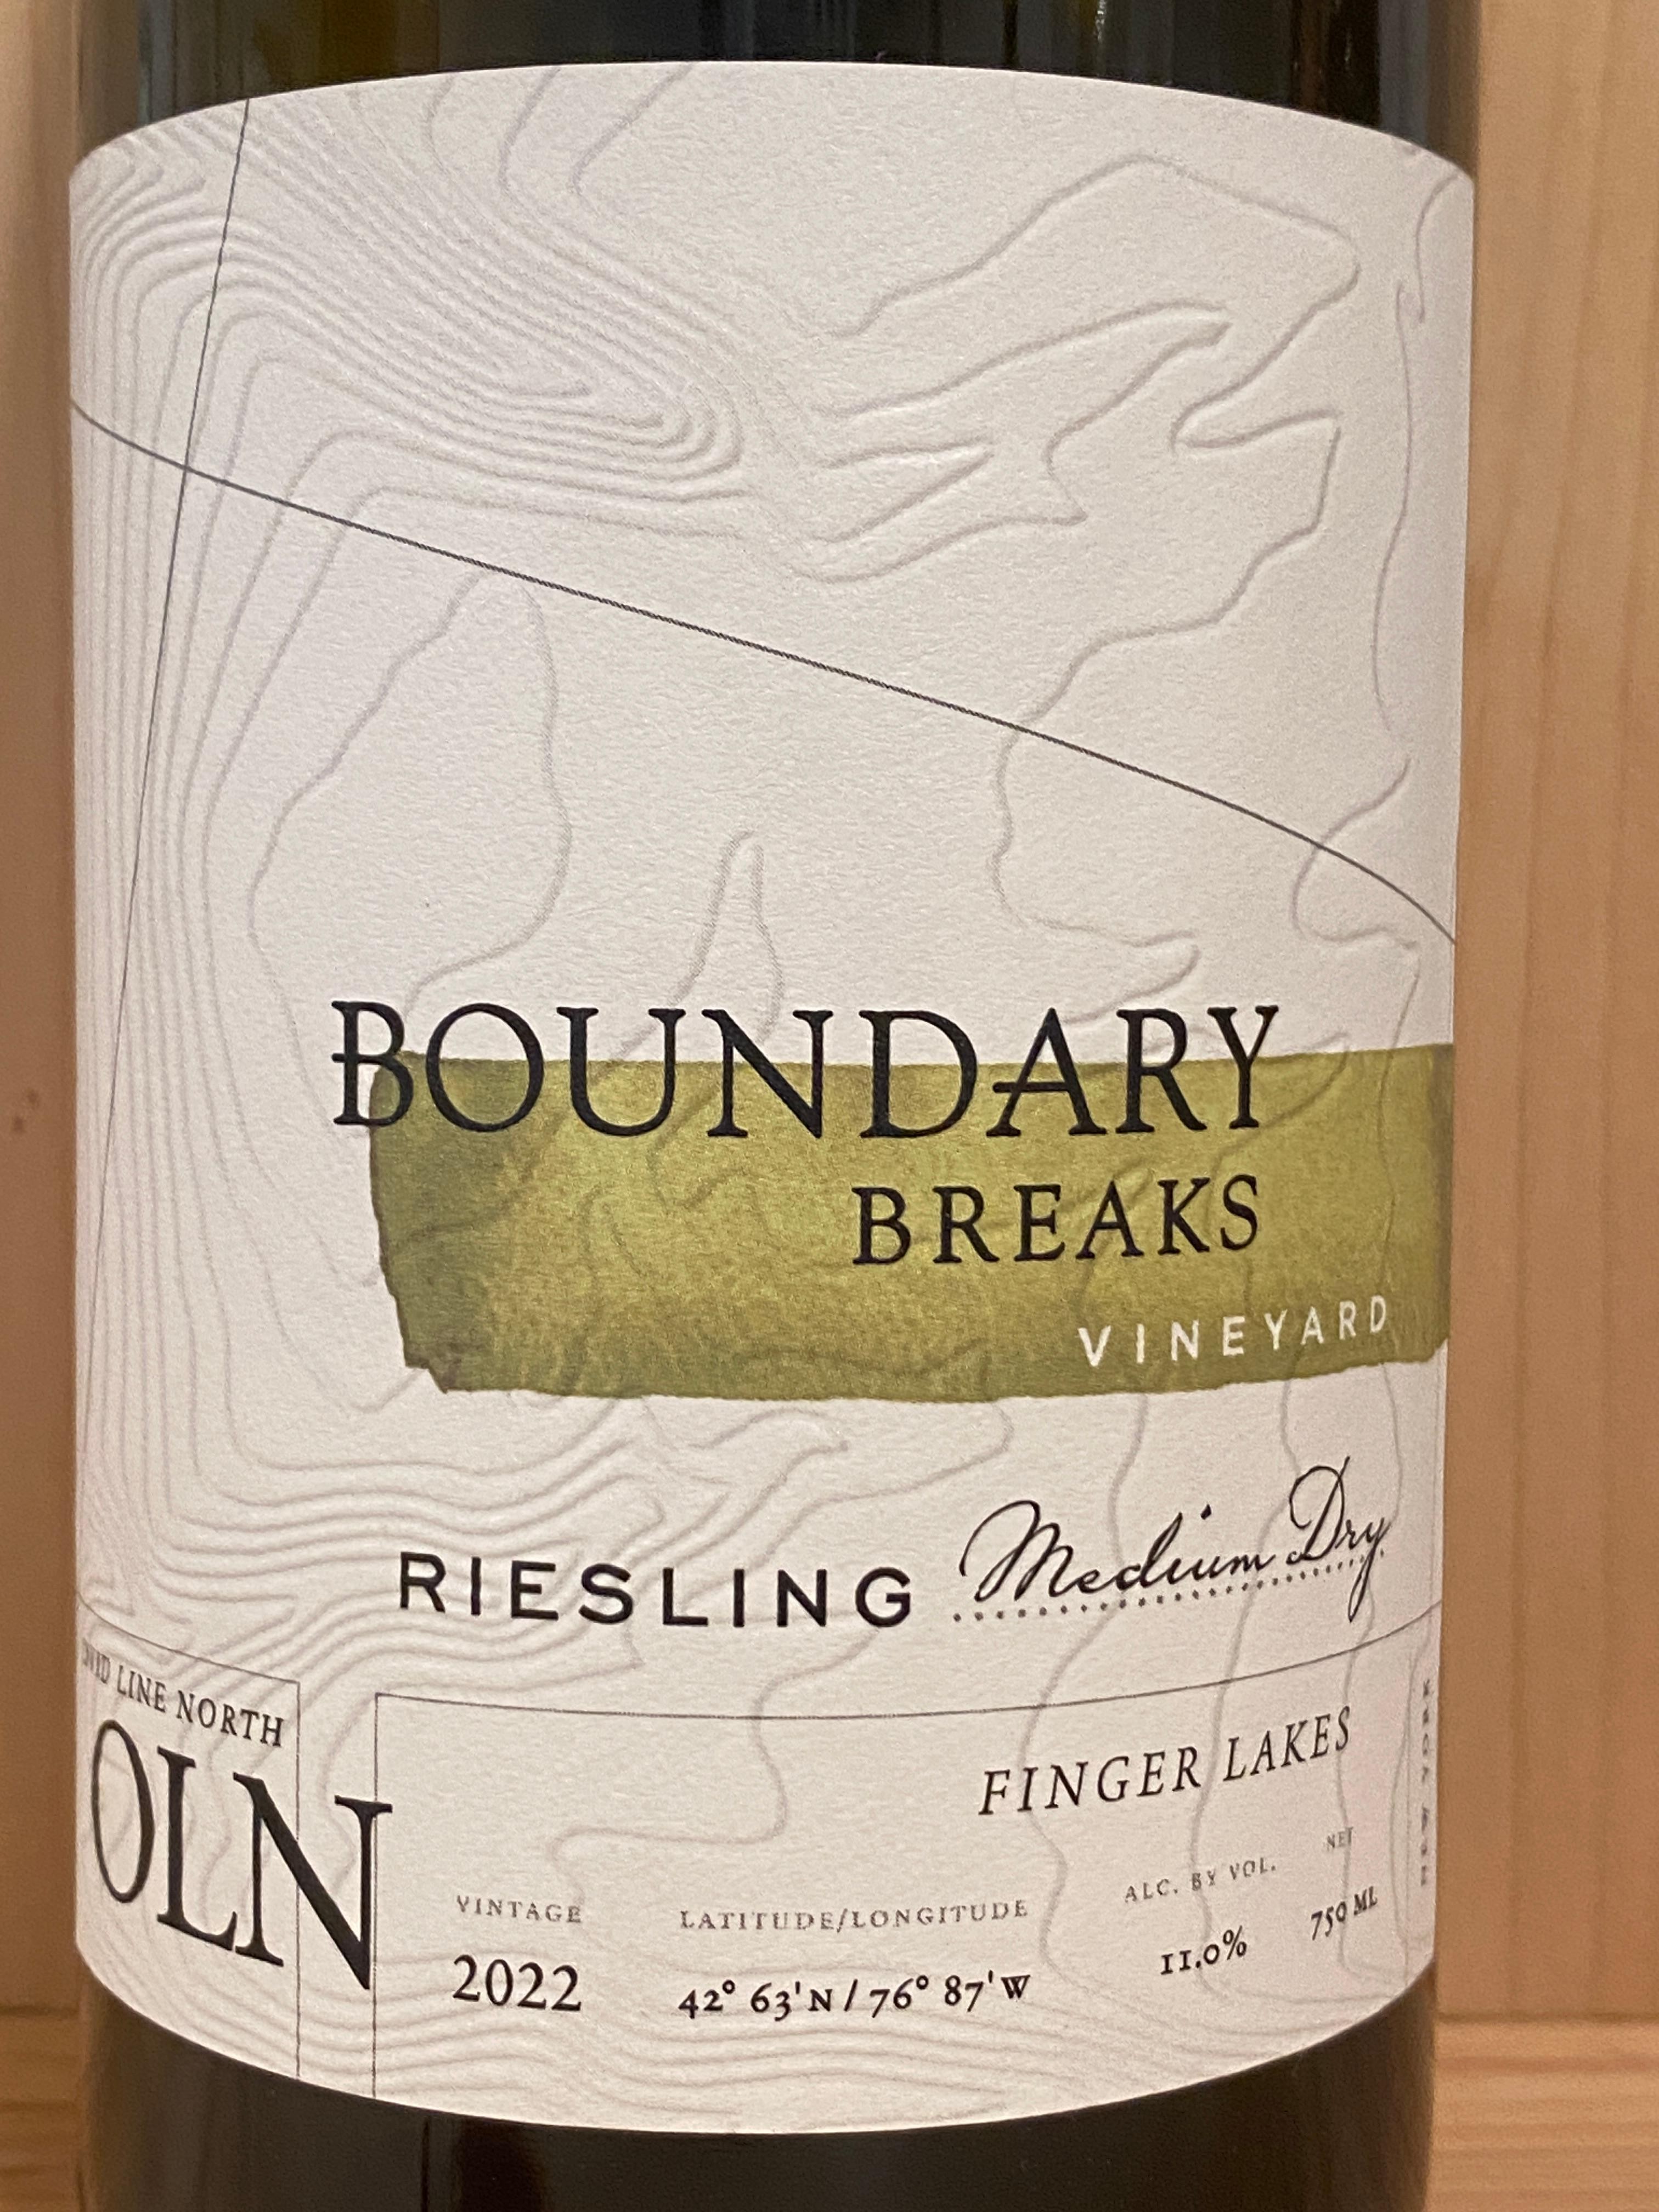 Boundary Breaks Vineyard Medium Dry "Ovid Line North" Riesling 2022: Finger Lakes, New York